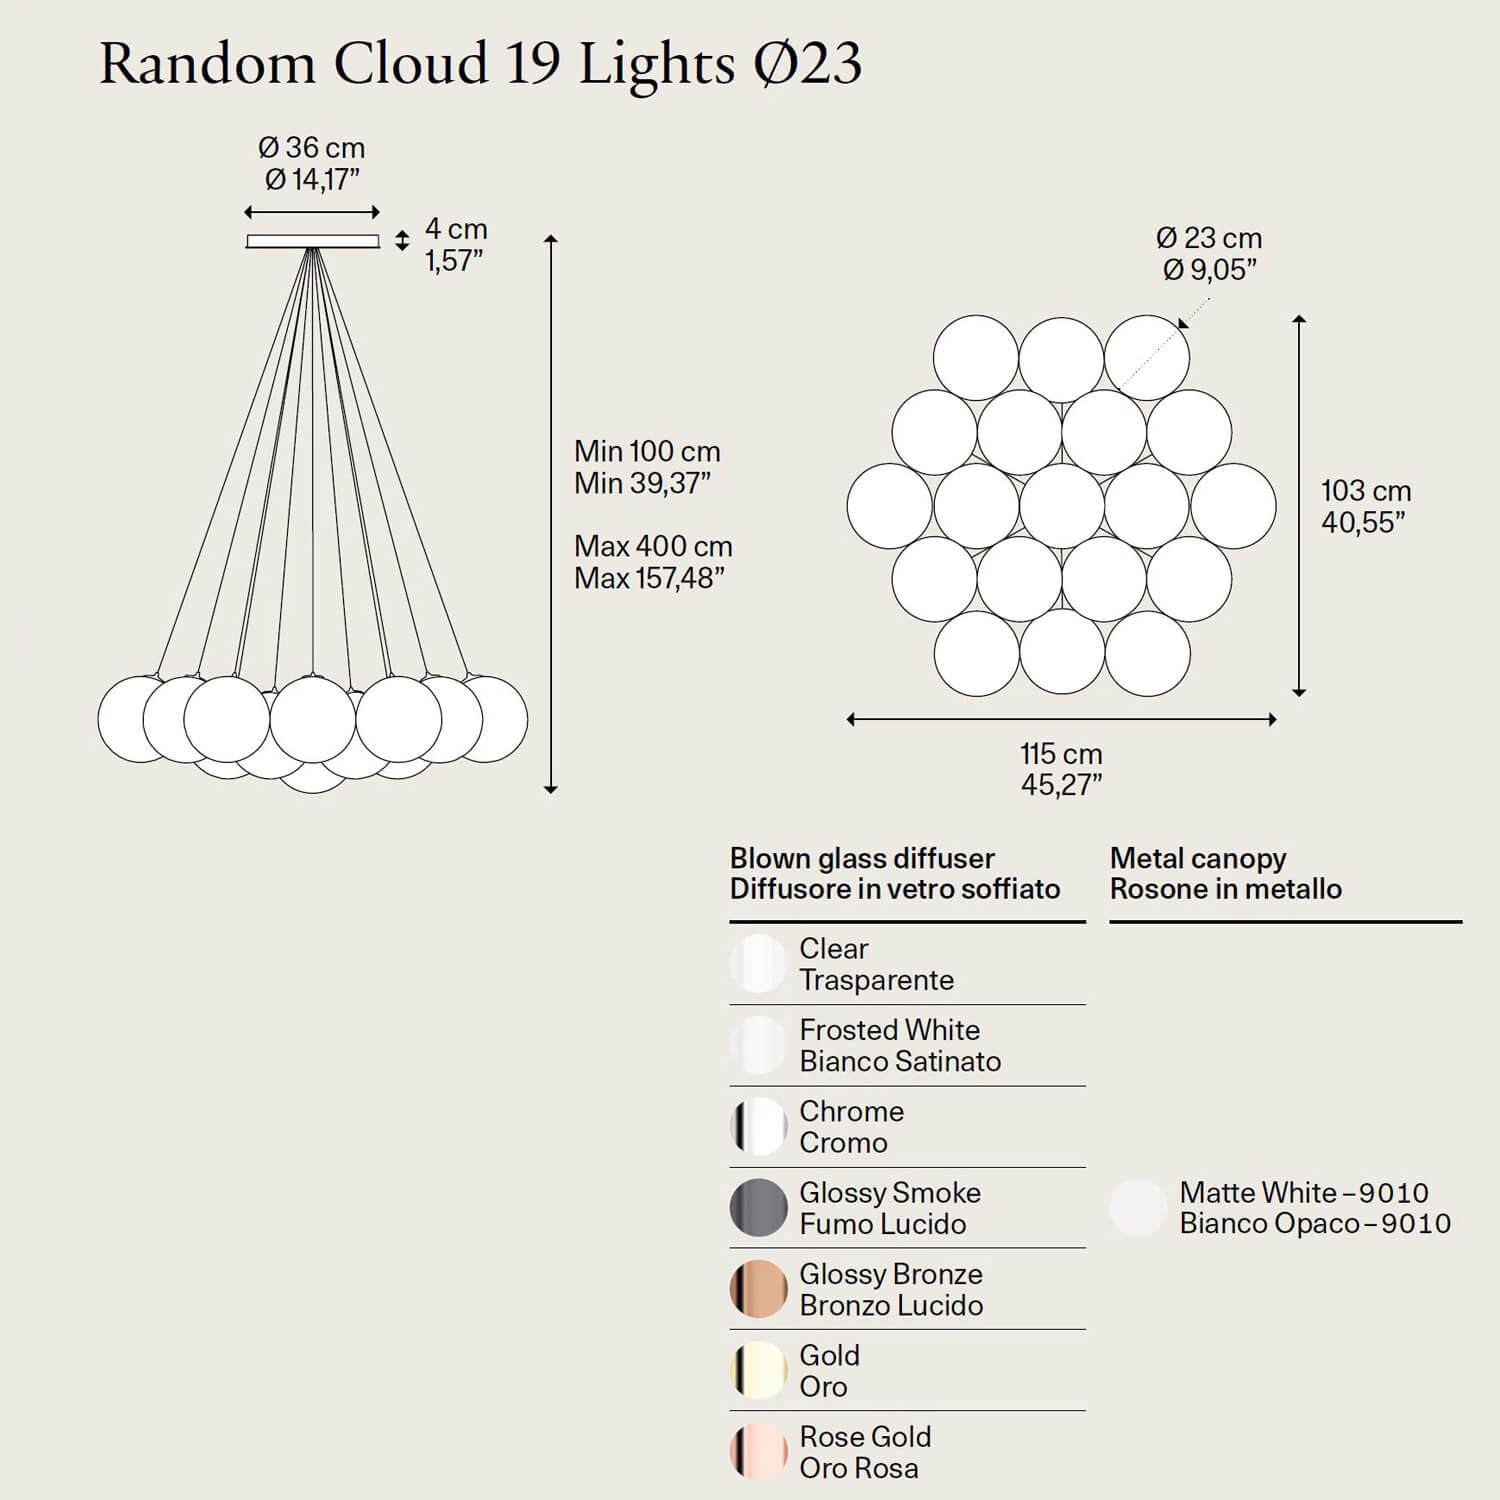 Random Cloud 19 Lights Ø23 by Lodes